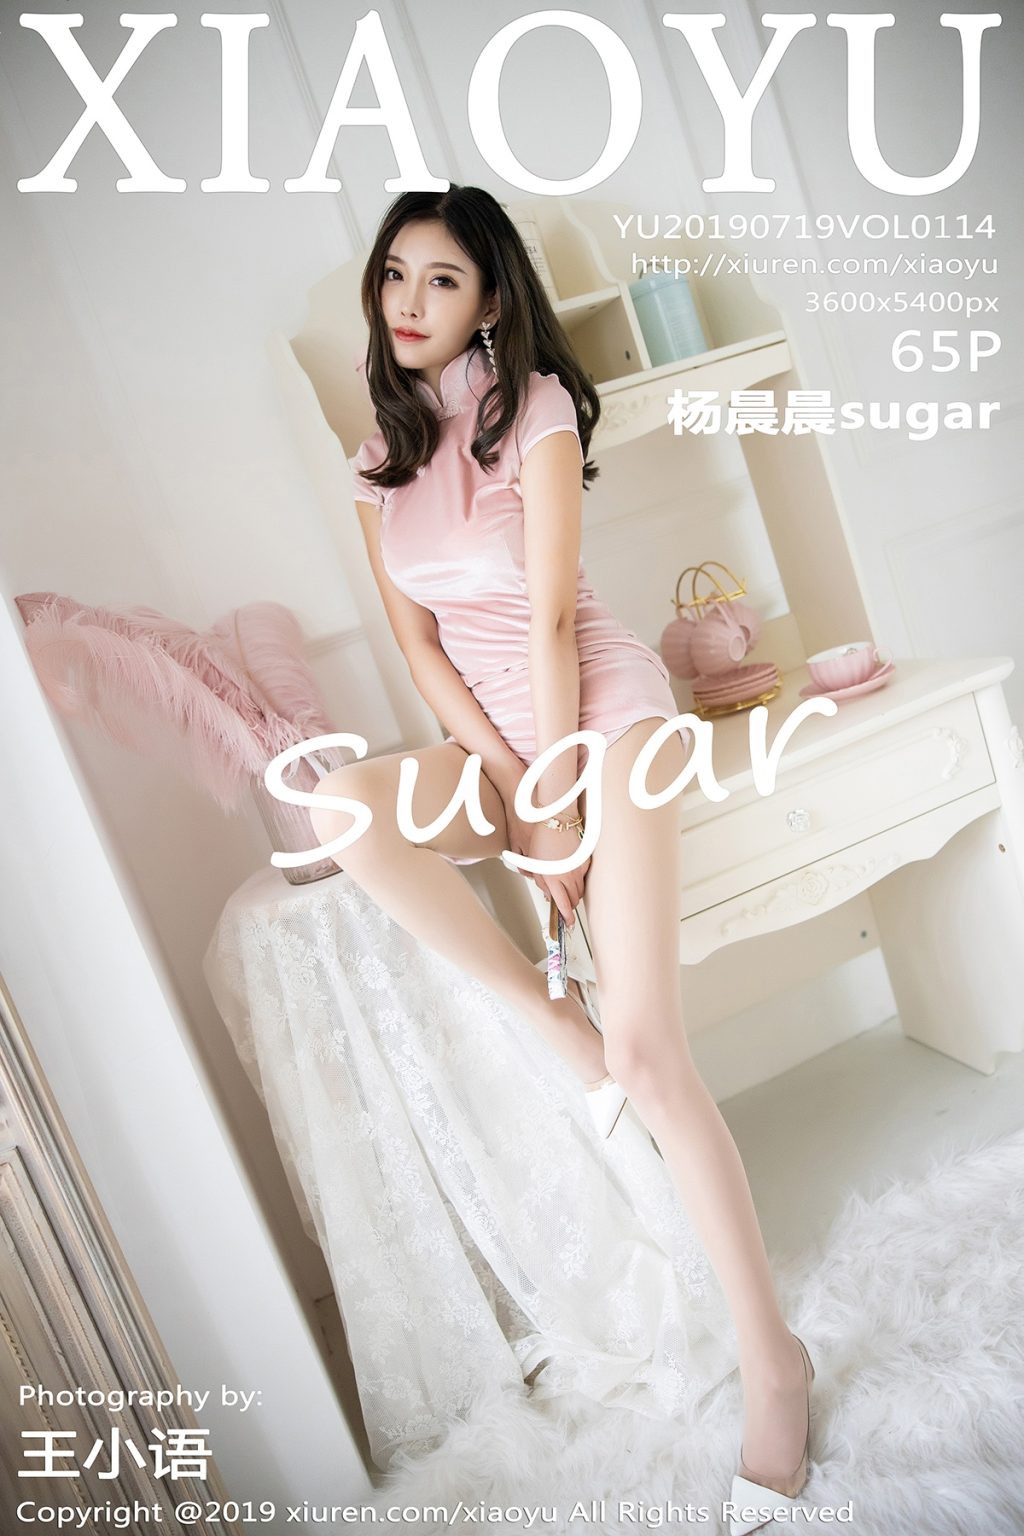 Watch sexy XiaoYu Vol.114: Yang Chen Chen (杨晨晨sugar) photos